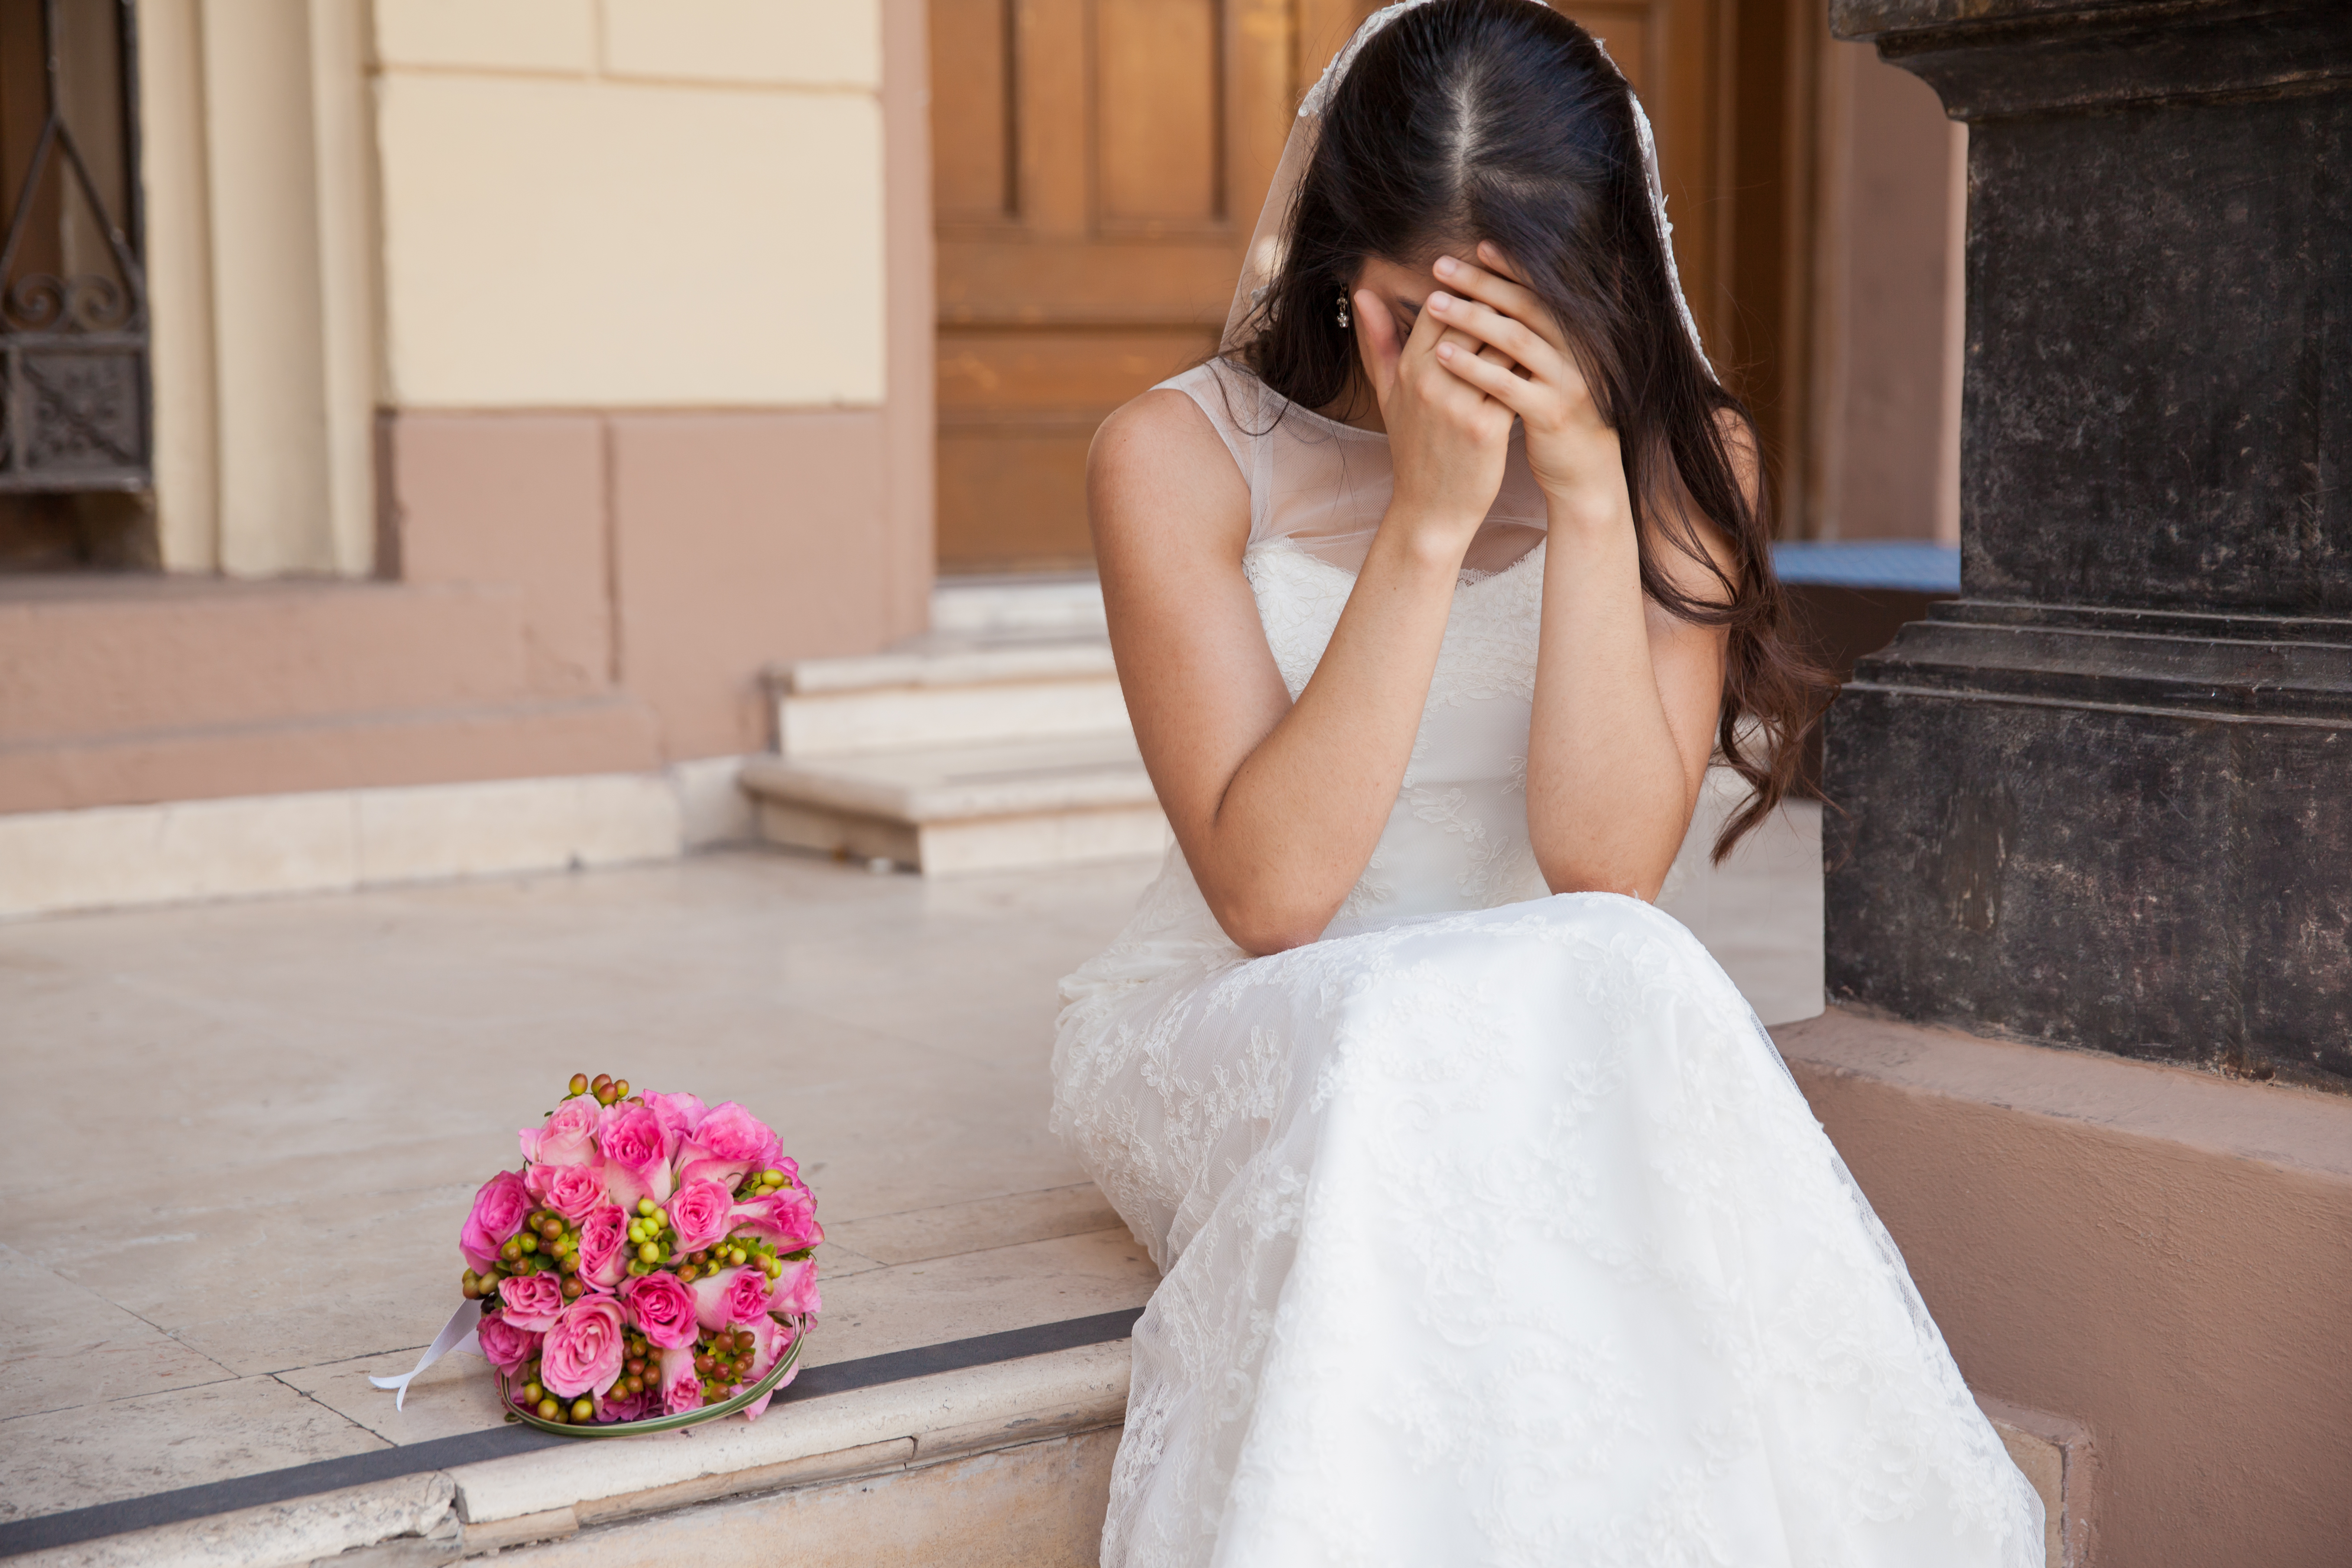 Una novia triste | Fuente: Shutterstock